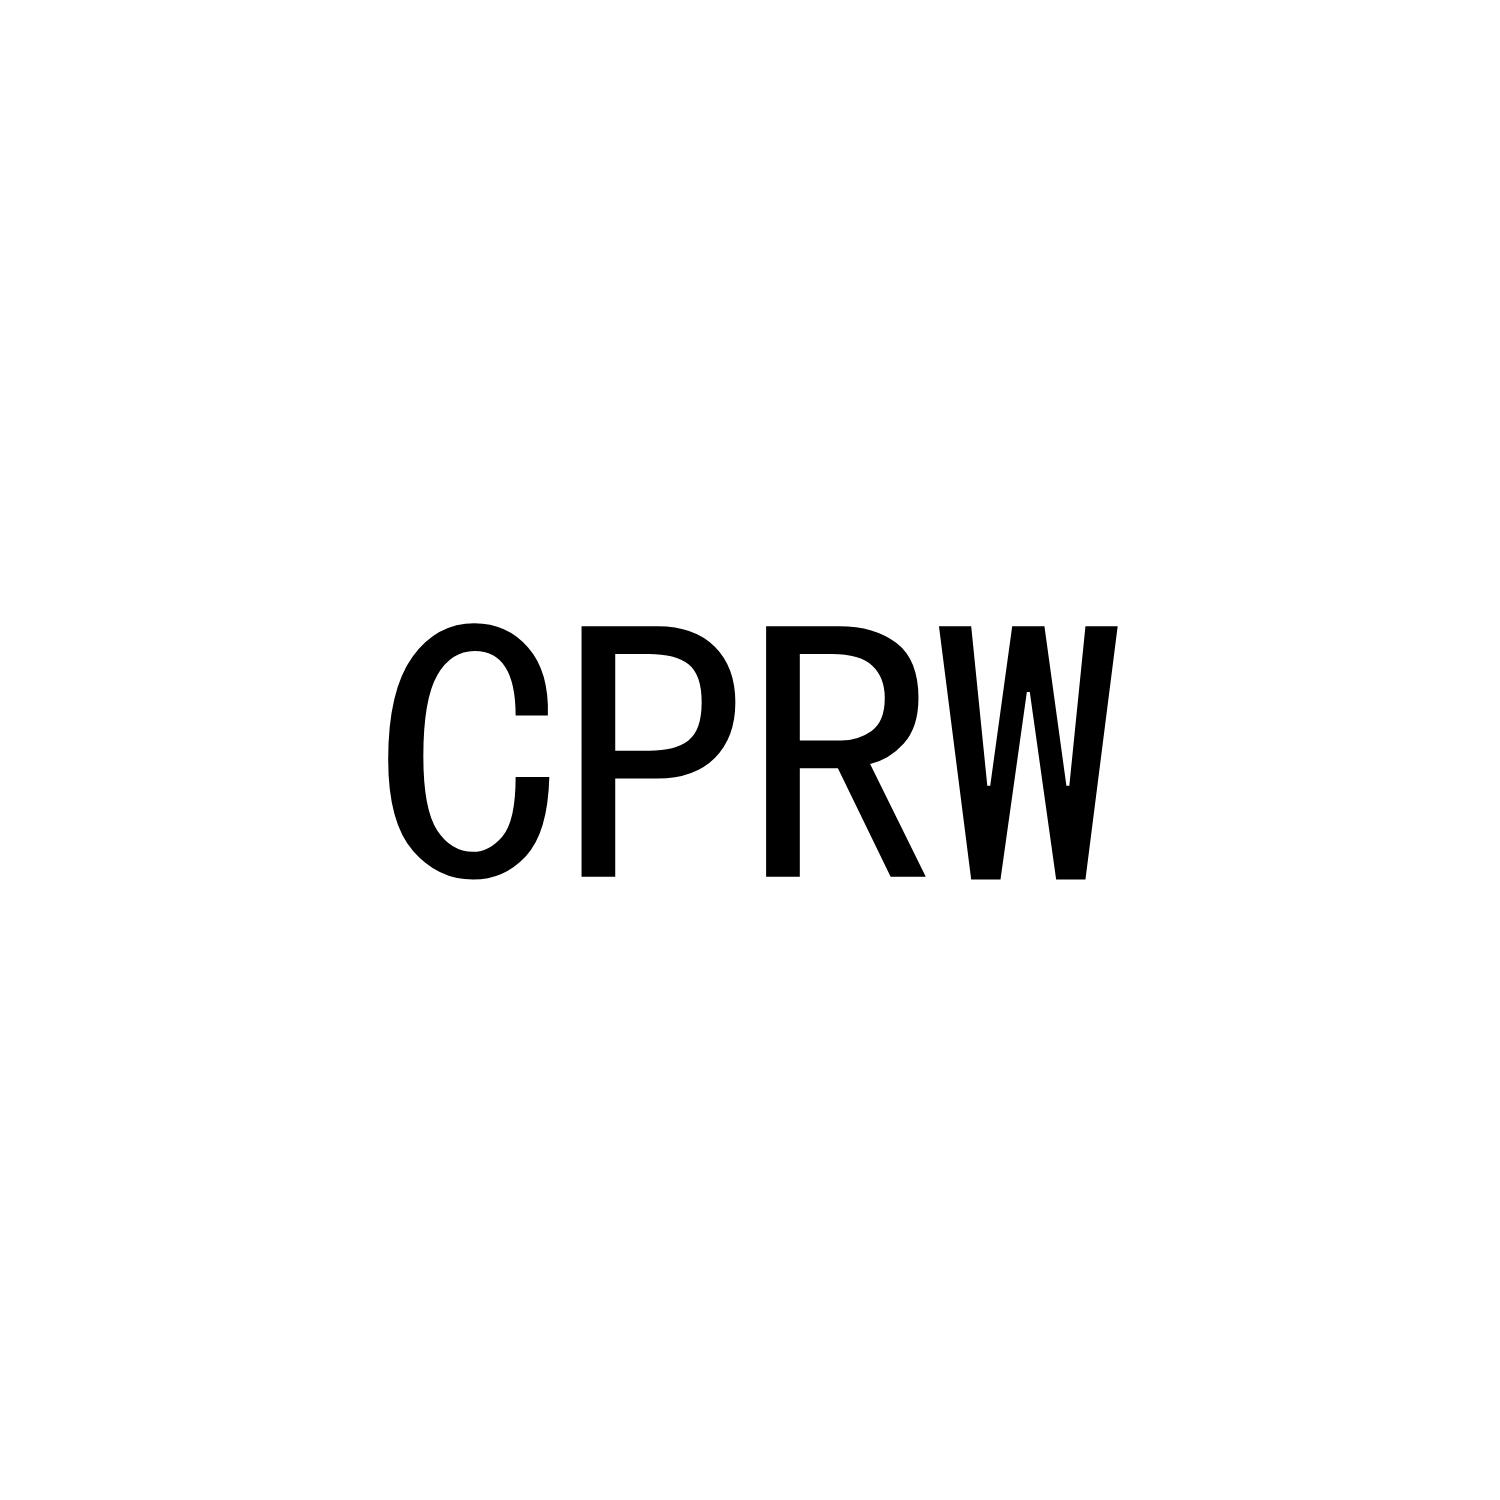 CPRW